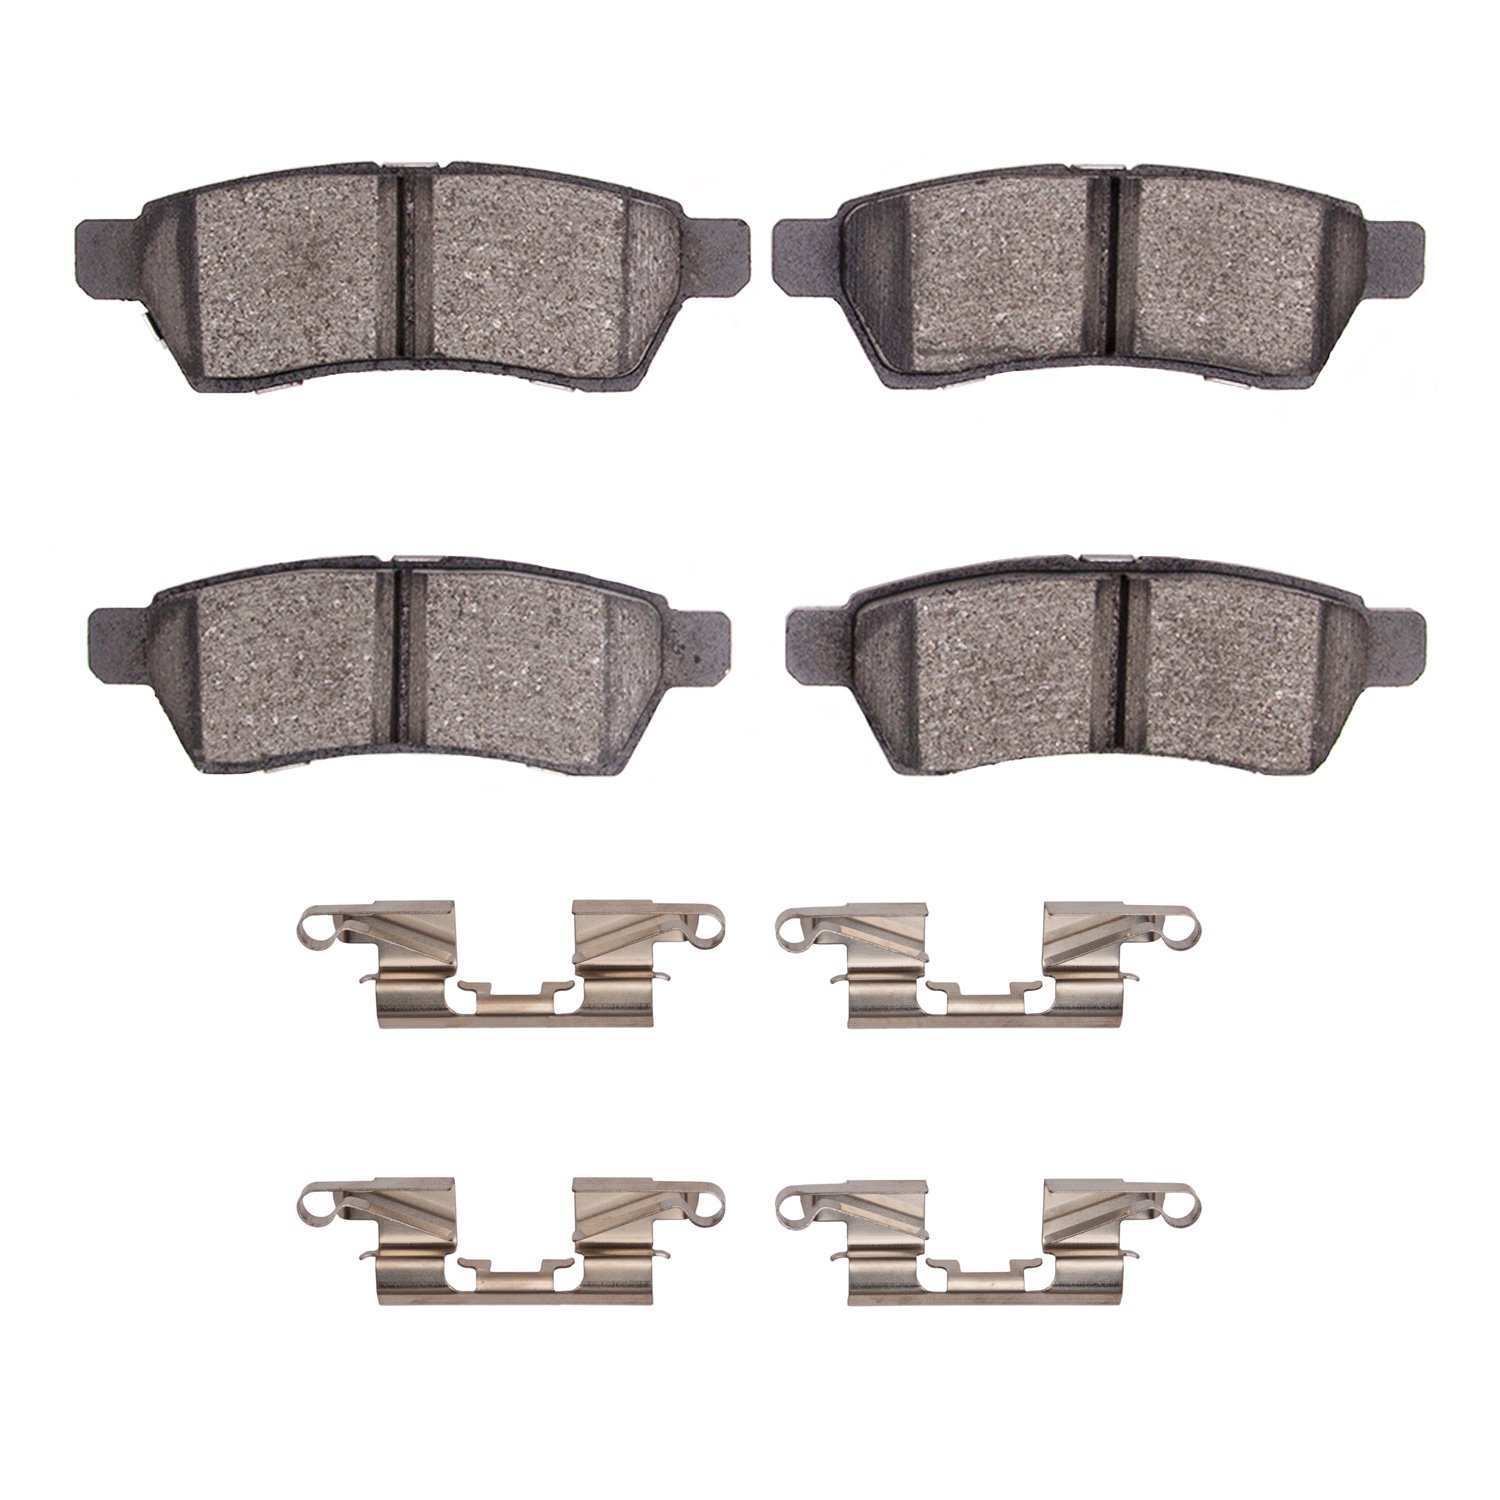 Semi-Metallic Brake Pads & Hardware Kit, Fits Select Fits Multiple Makes/Models, Position: Rear